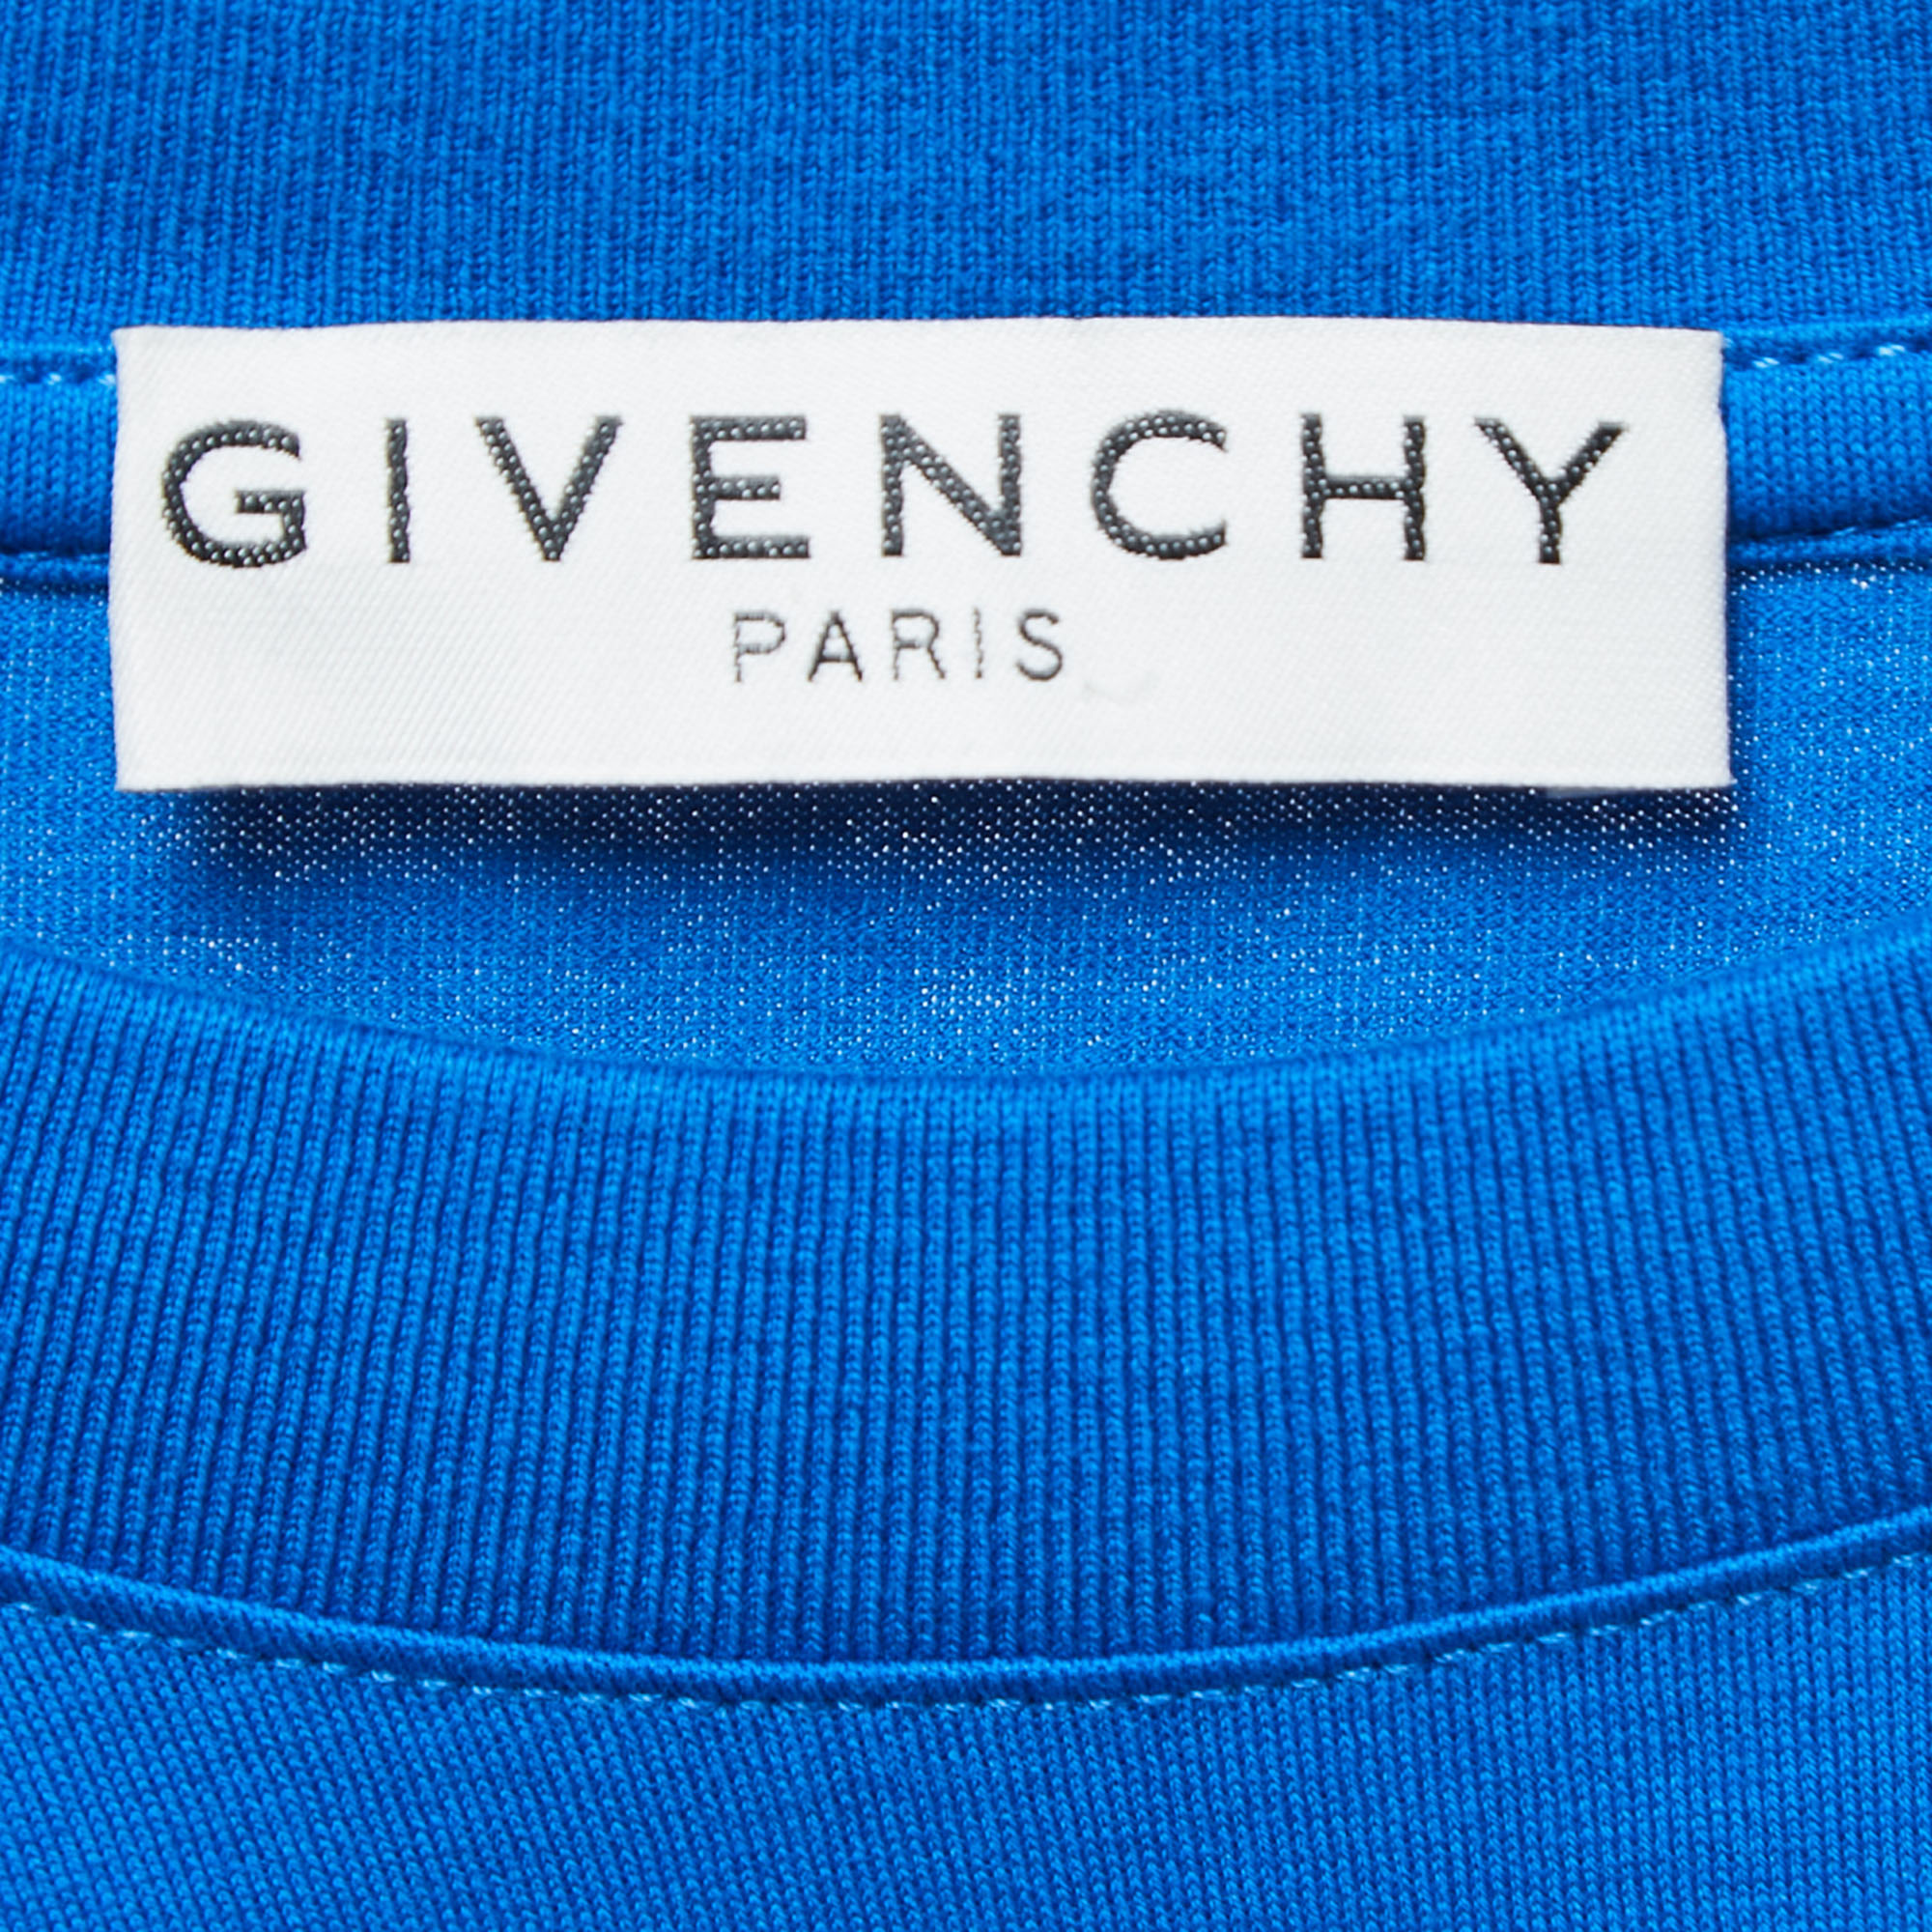 Givenchy Blue Cotton Logo Print T-Shirt M